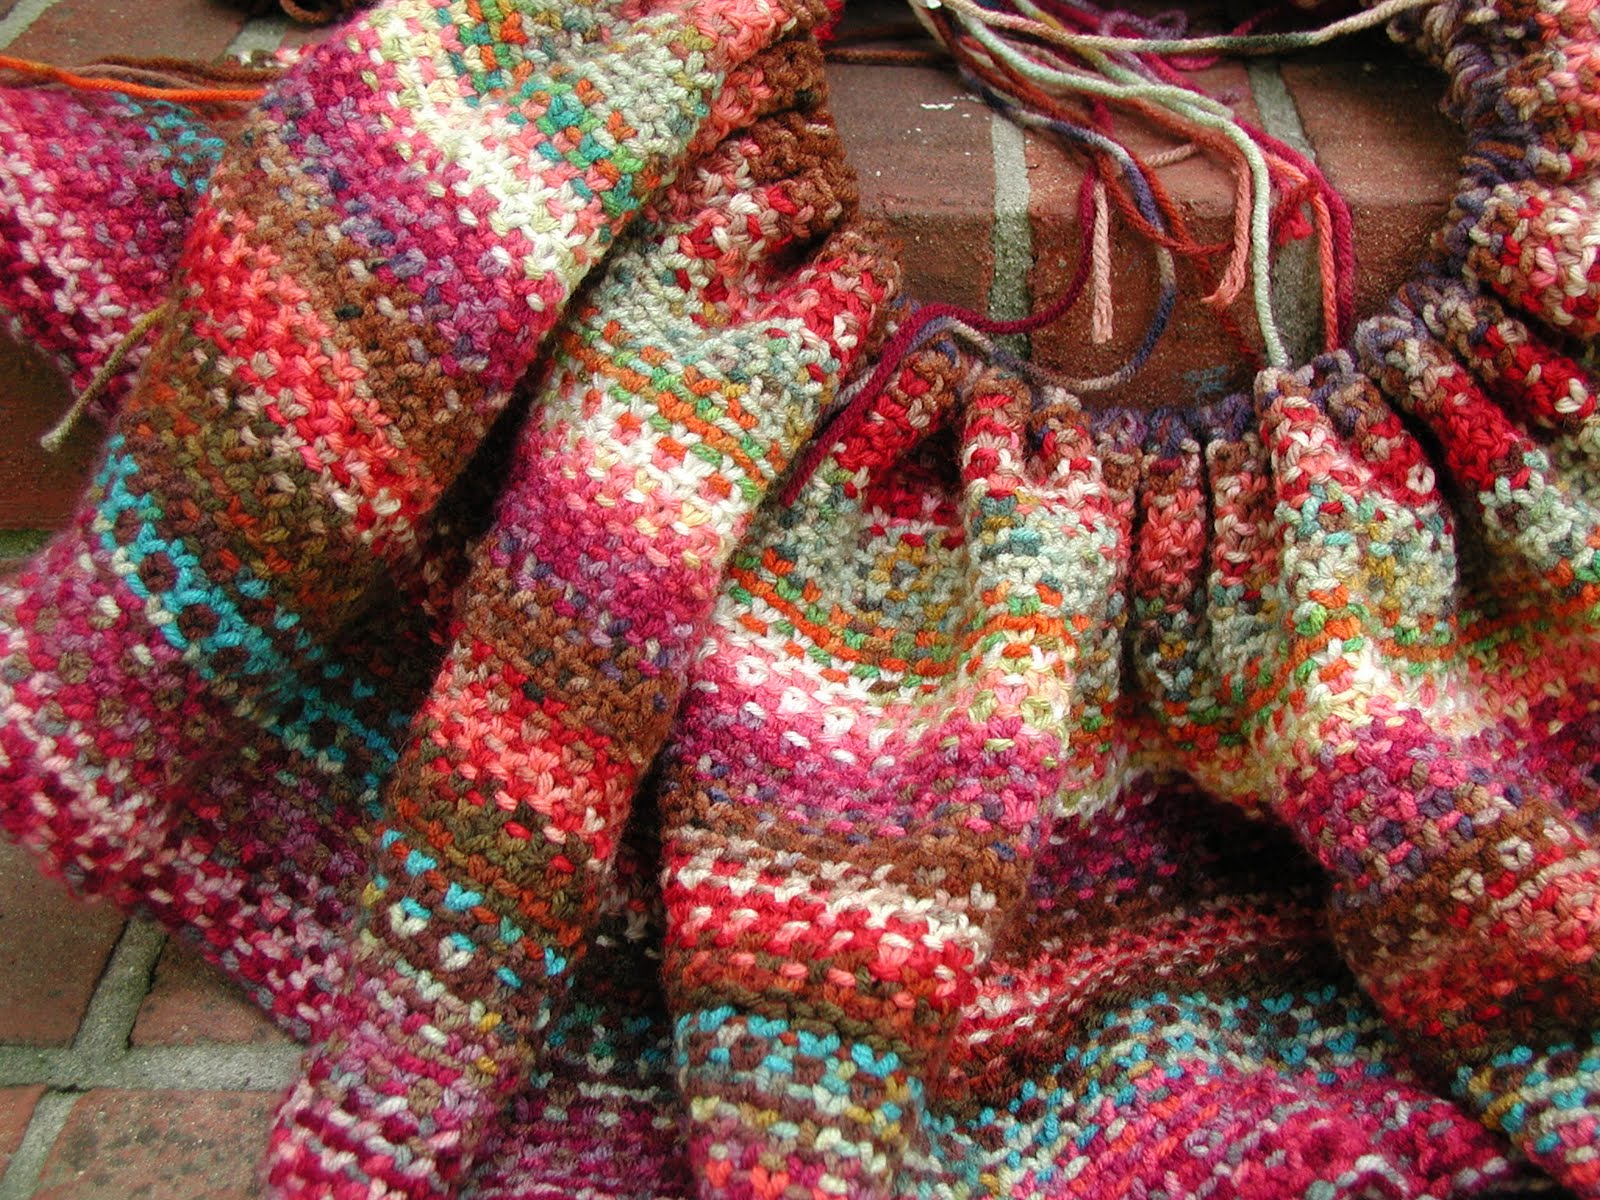 Variegated Yarn Patterns Knitting Fiddlesticks My Crochet And Knitting Ramblings Variegated Yarn